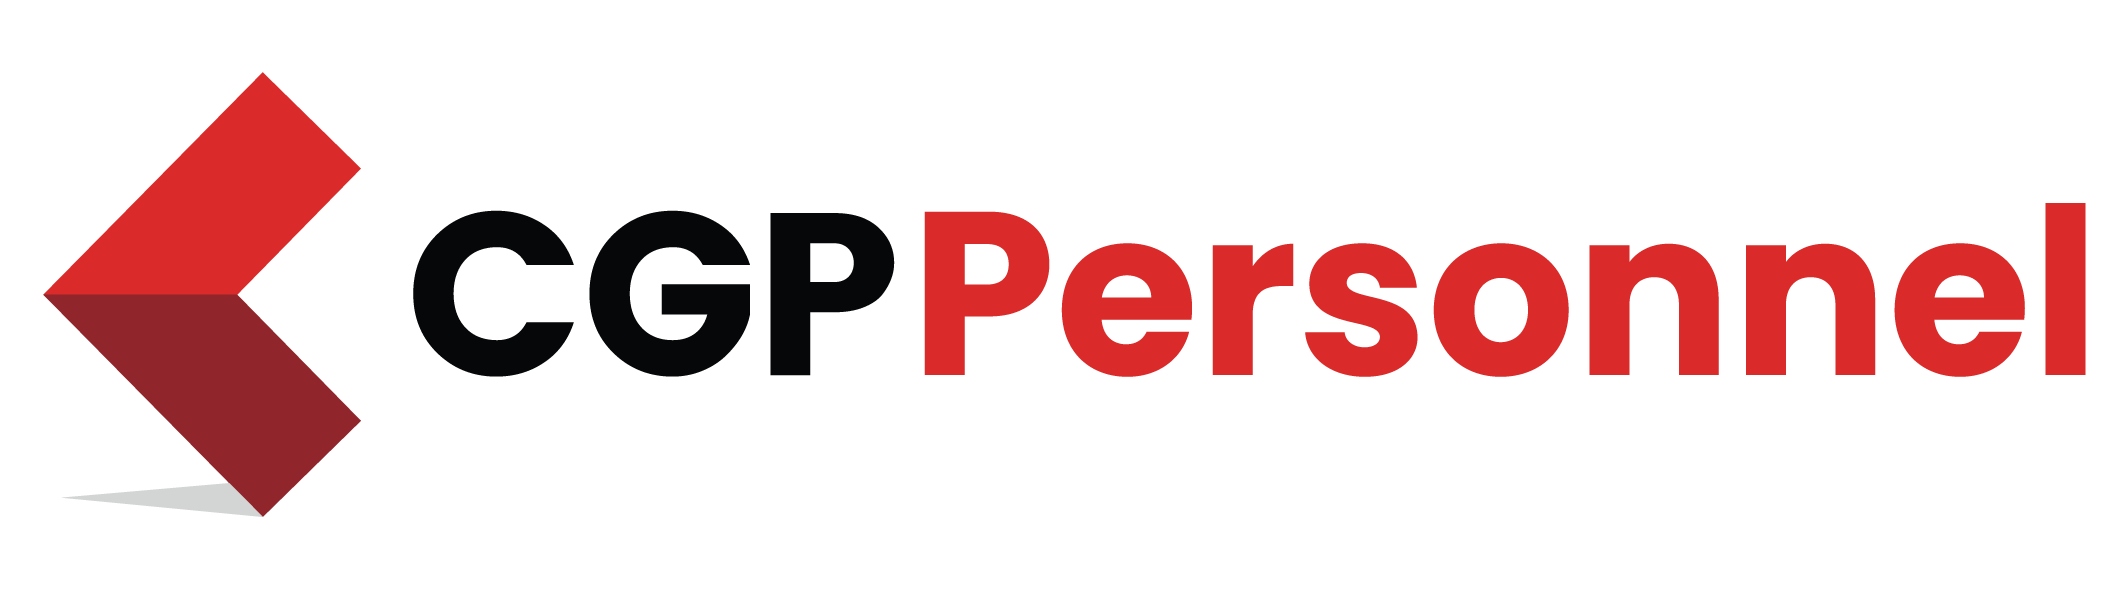 cgp personnel logos cgp personnel logo color